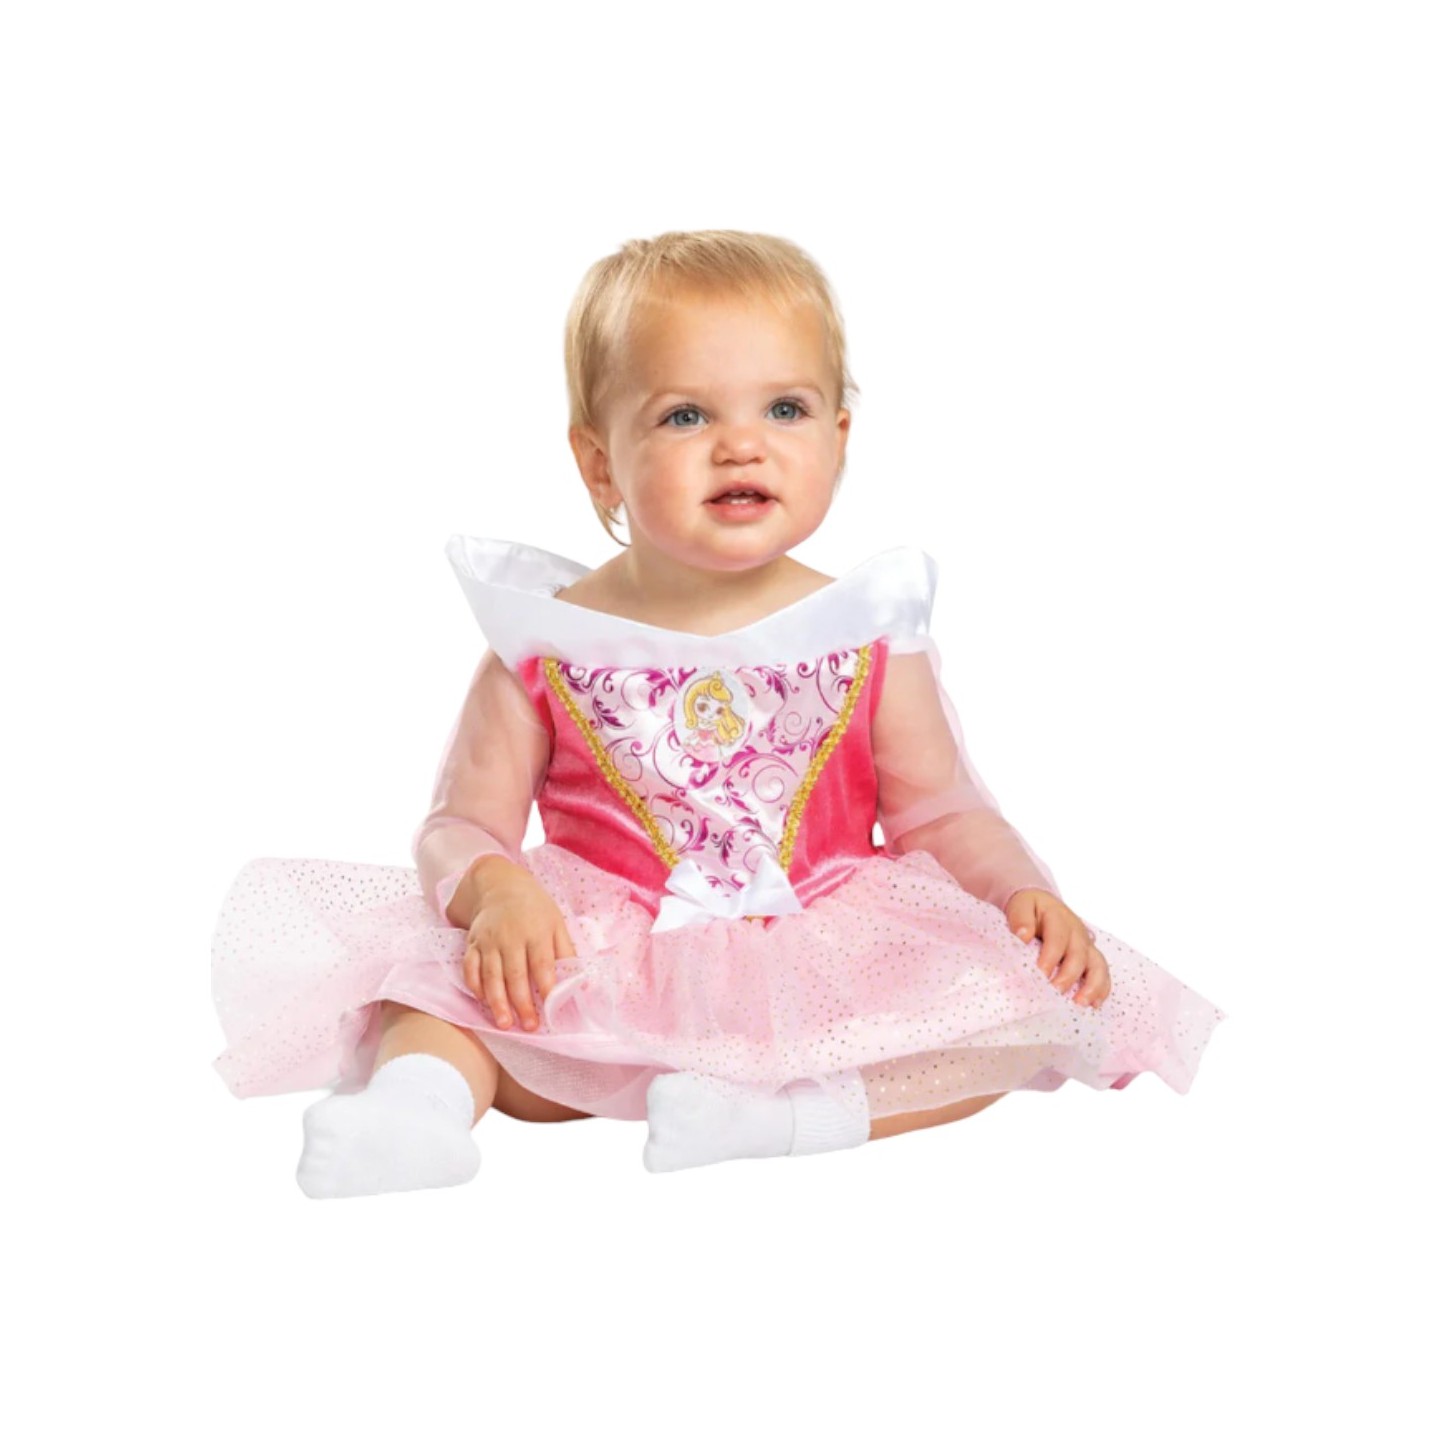 Disney Doornroosje jurk baby verkleedpak